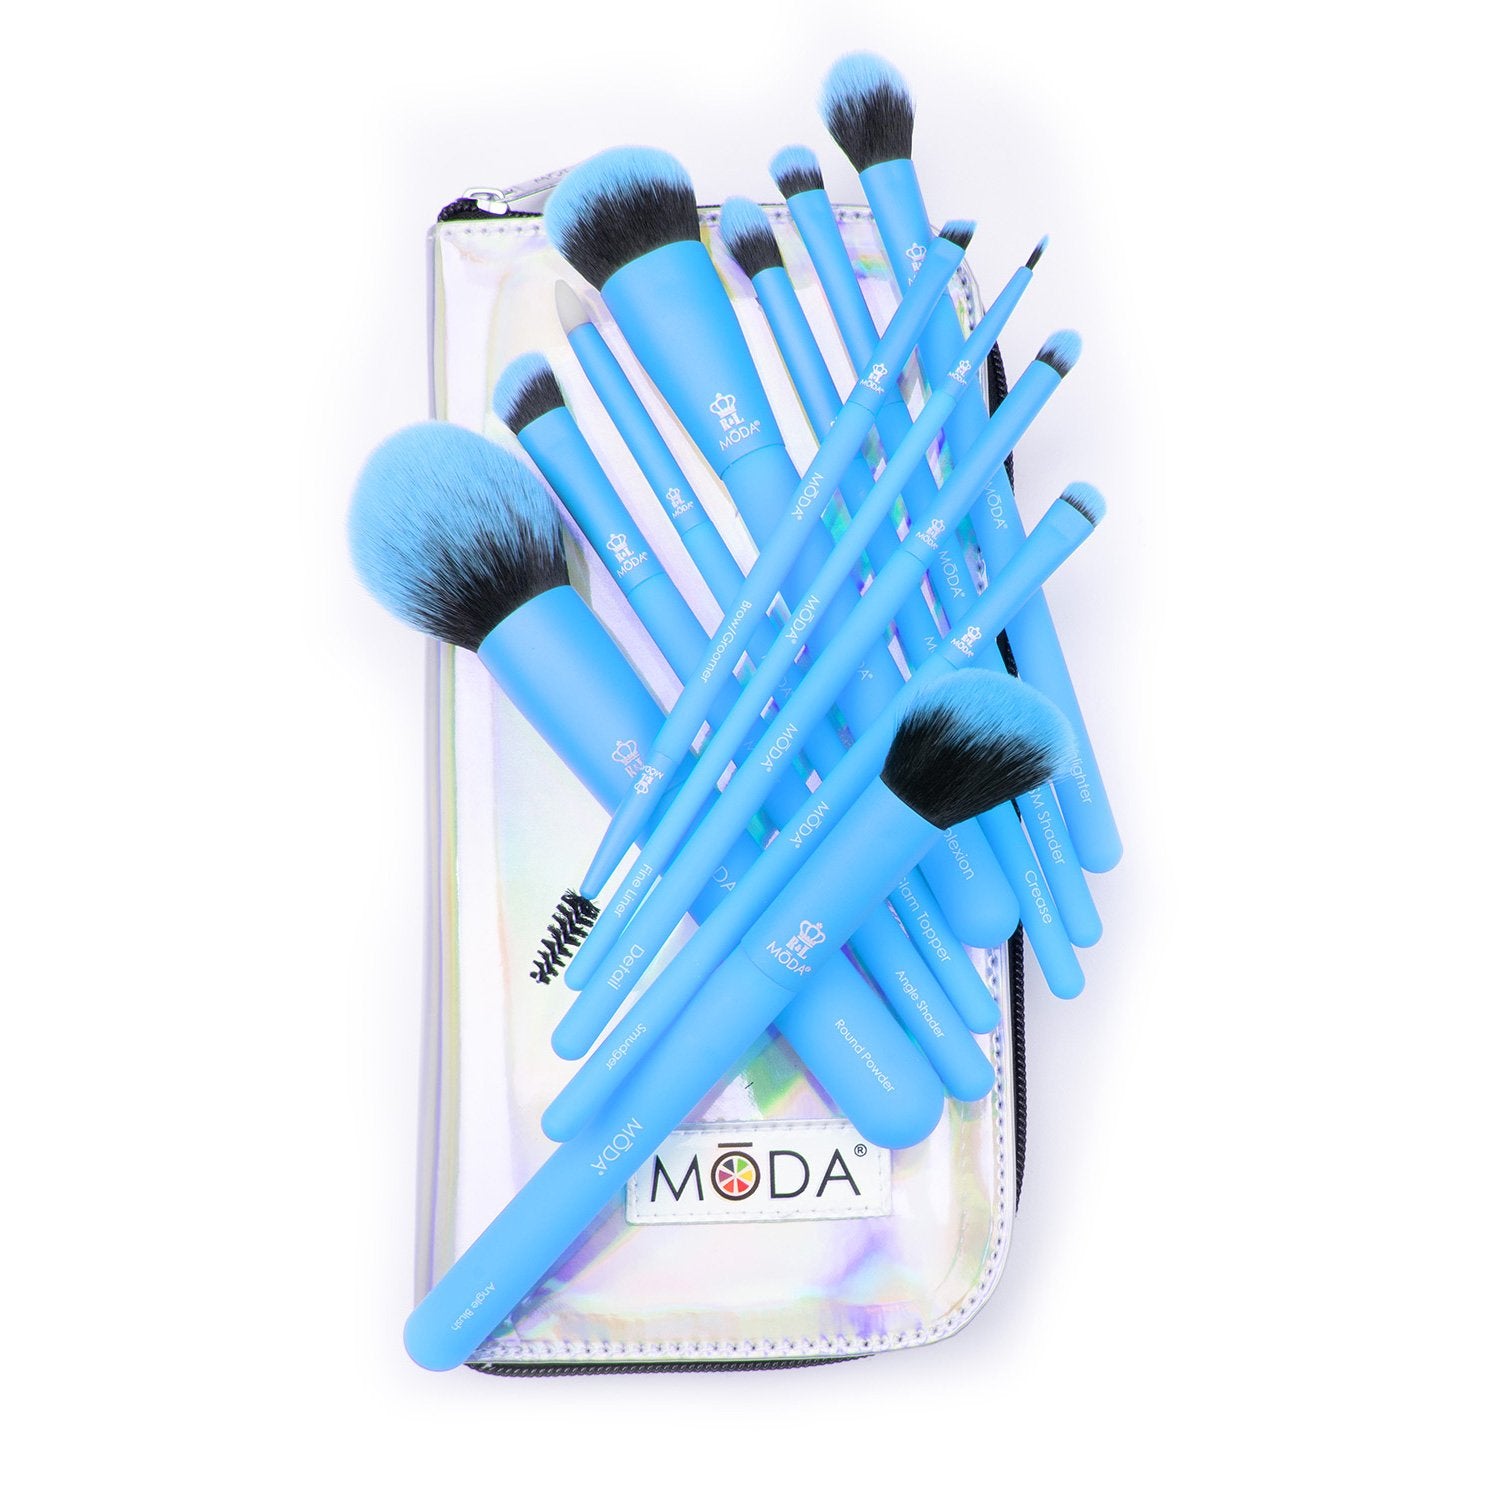 Moda - Totally Electric Neon Blue Full Face Kit